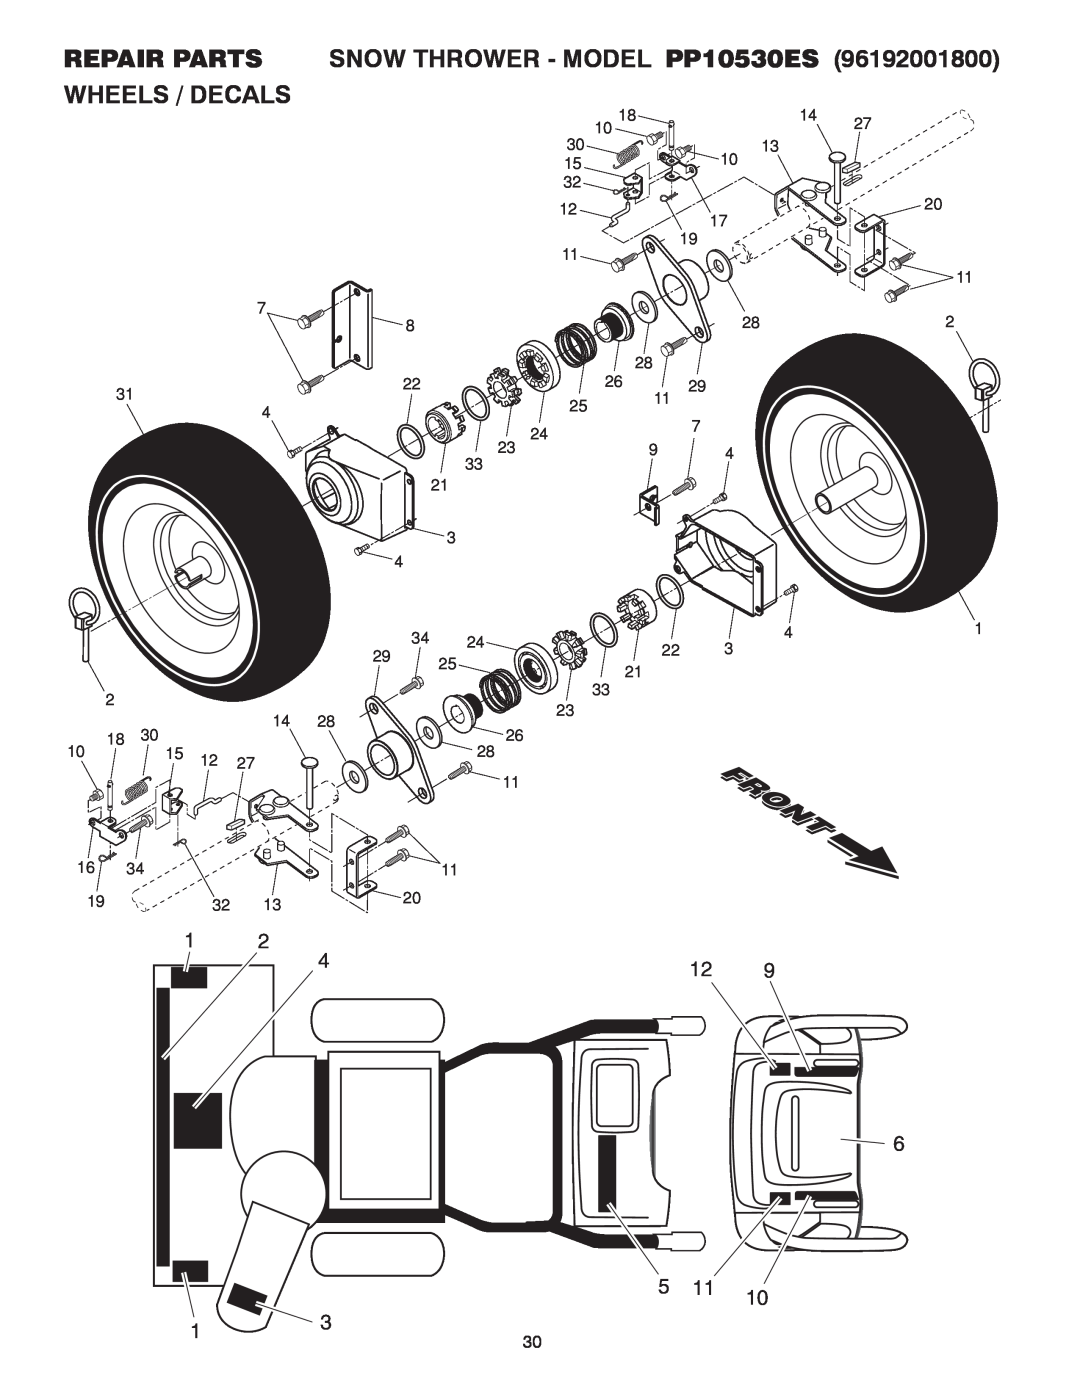 Poulan 414659 owner manual SNOW THROWER - MODEL PP10530ES, Repair Parts Wheels / Decals 